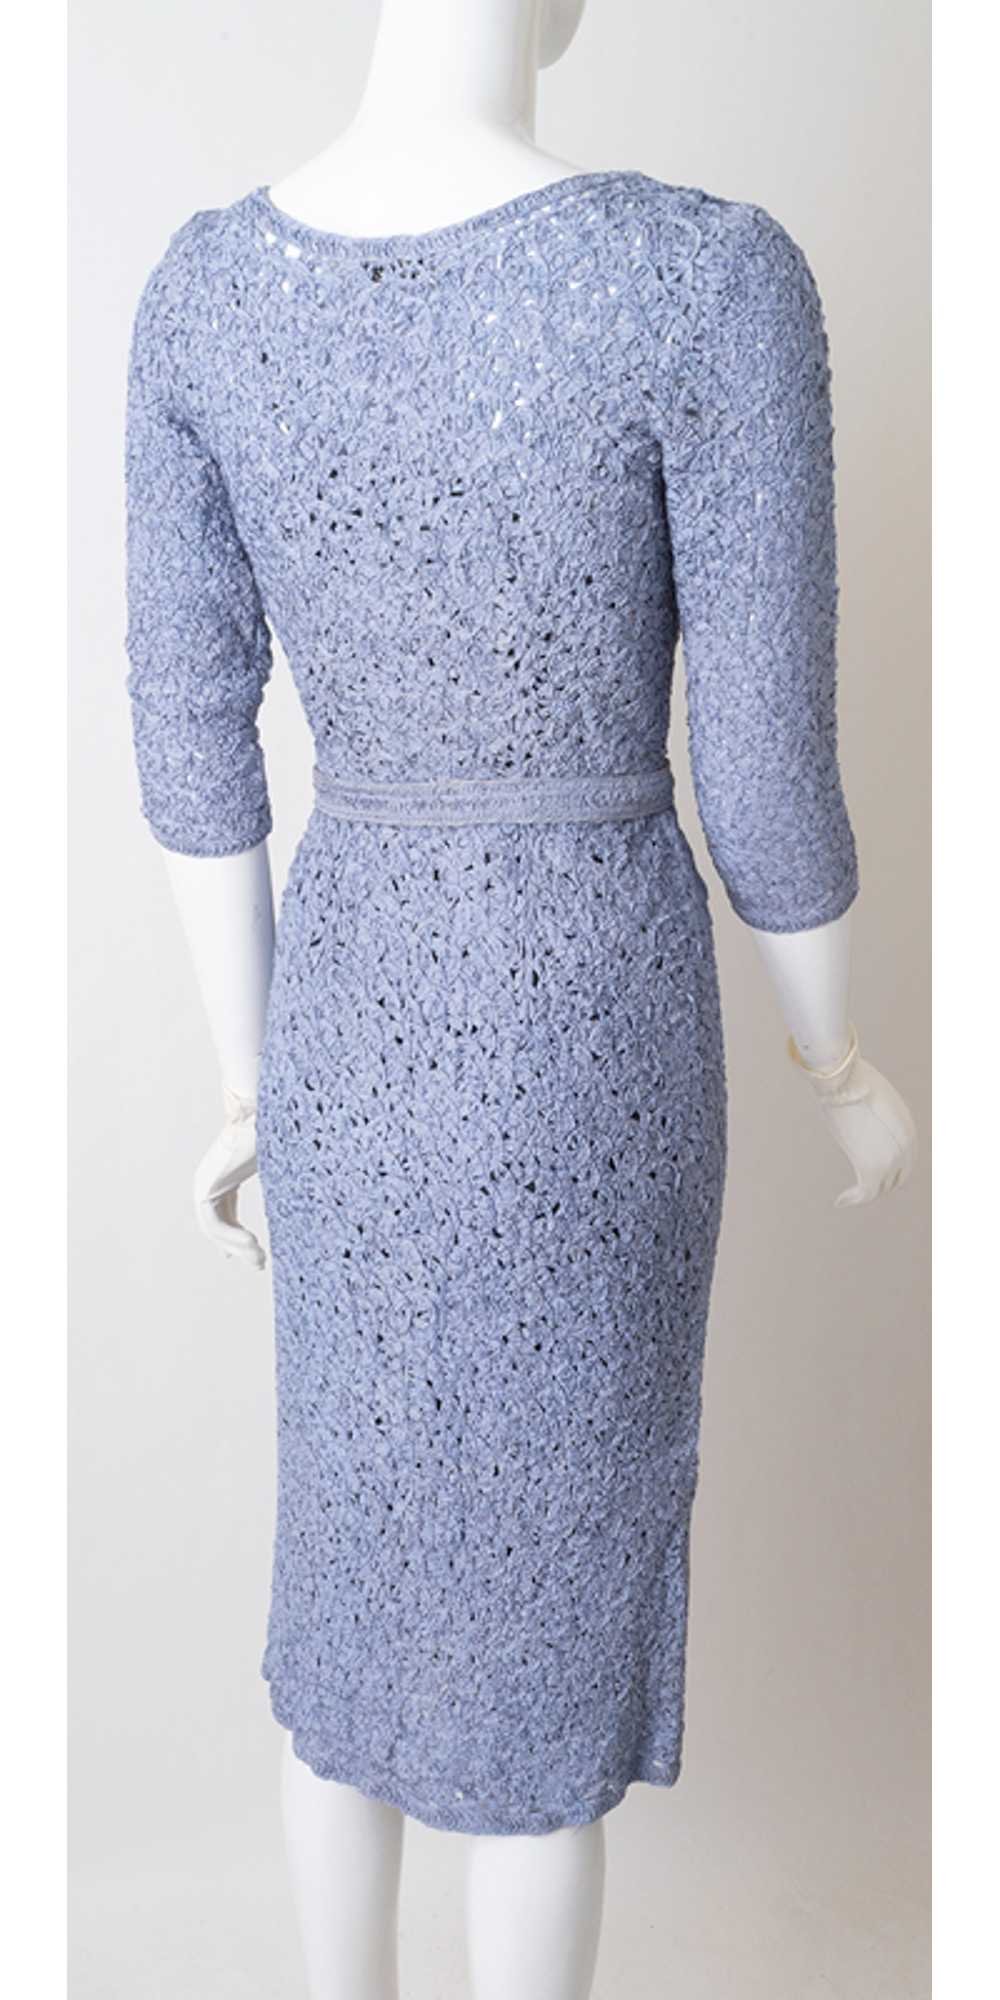 Periwinkle Blue 1950s Ribbon Dress - image 5